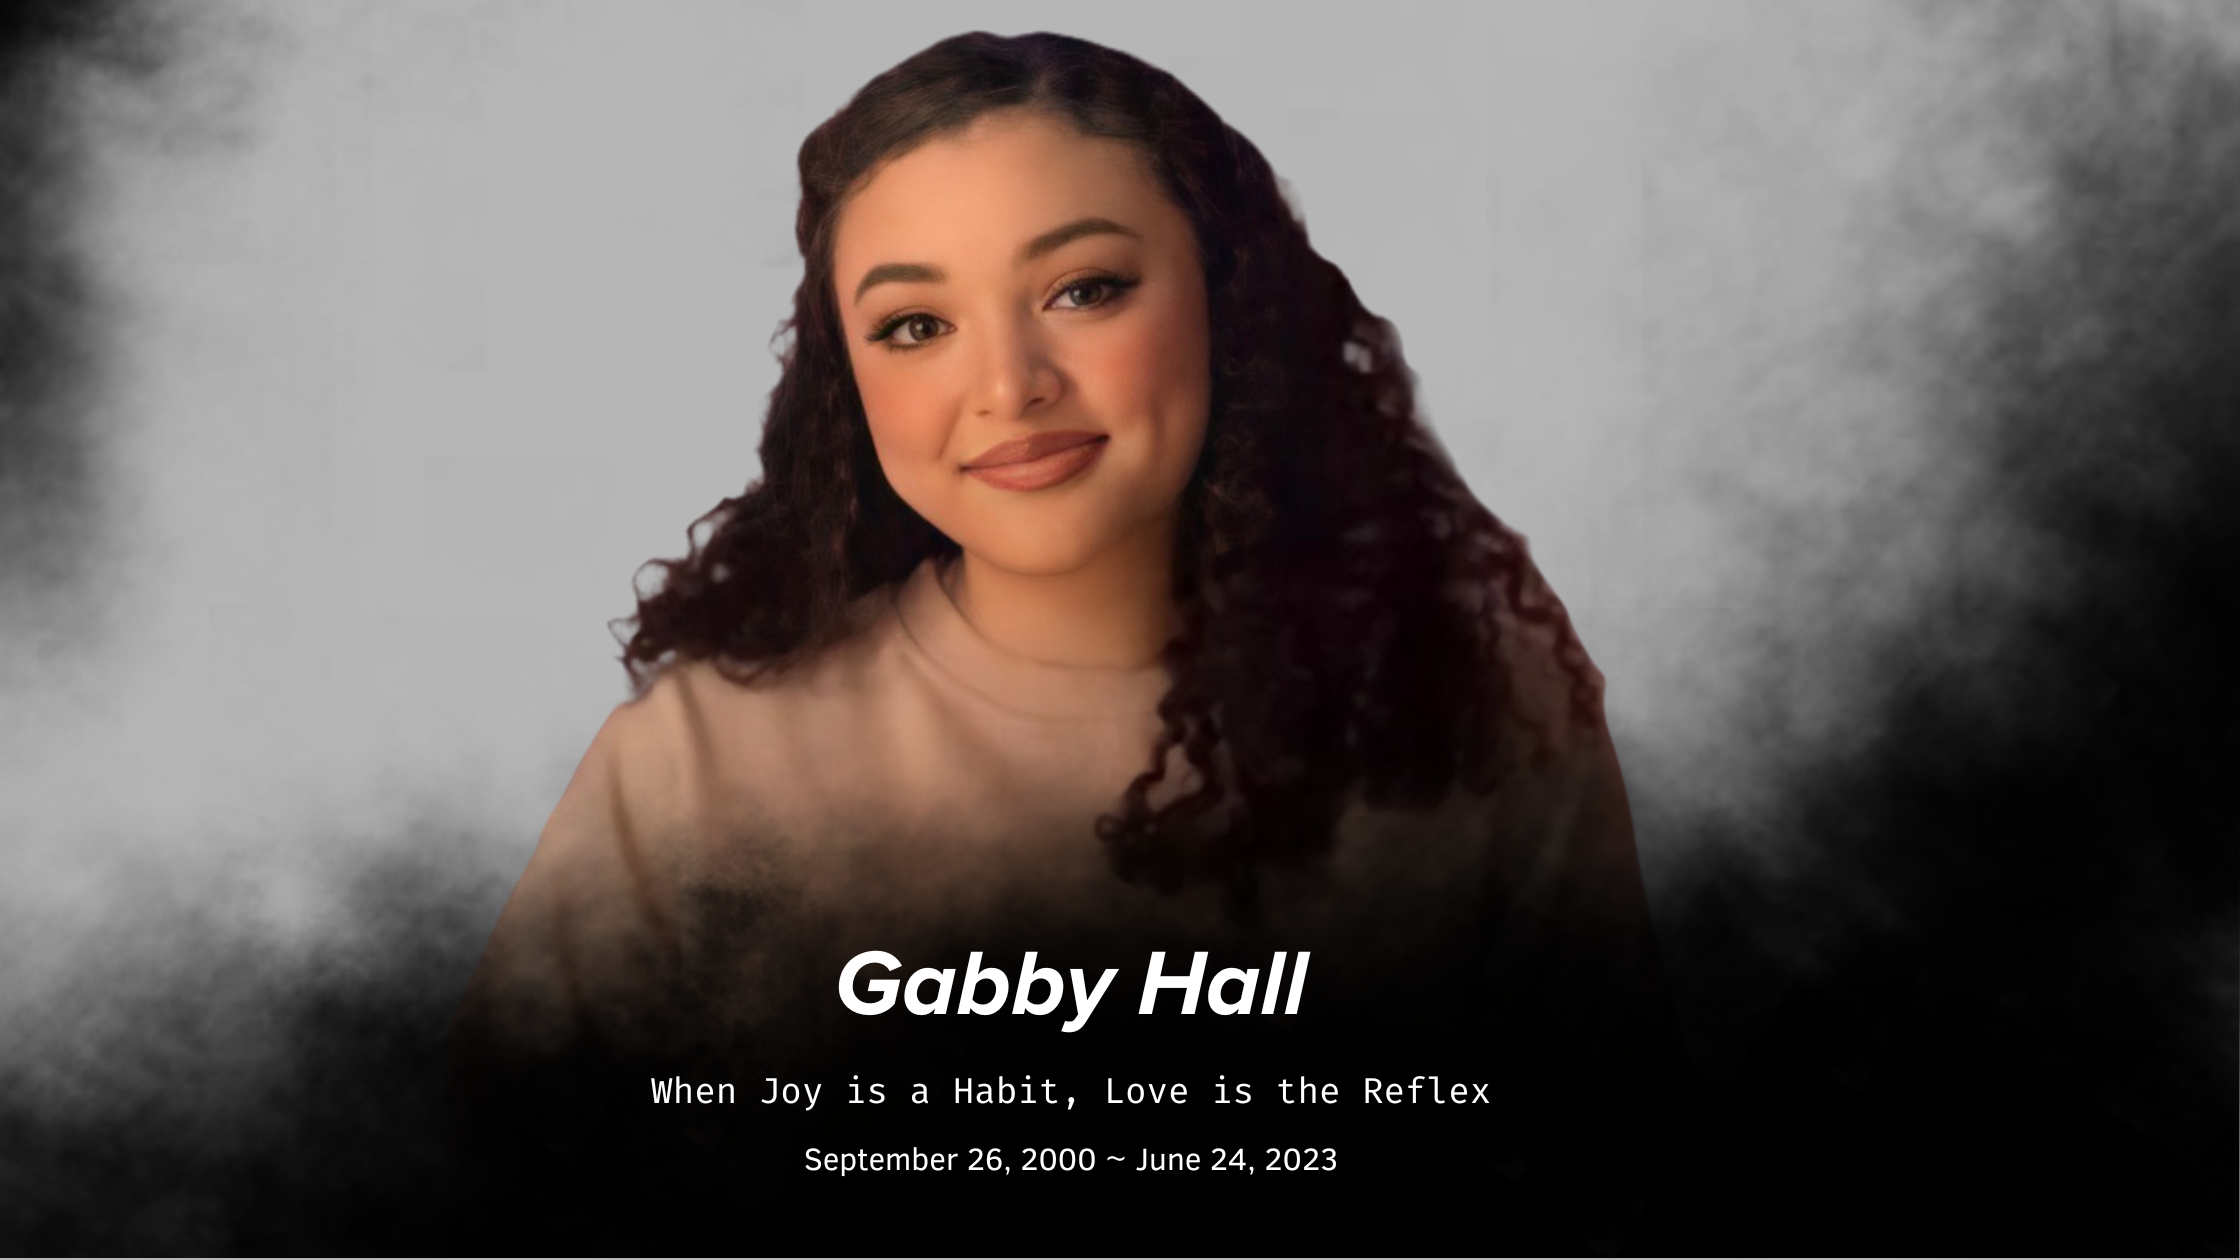 Remembering Gabby Hall